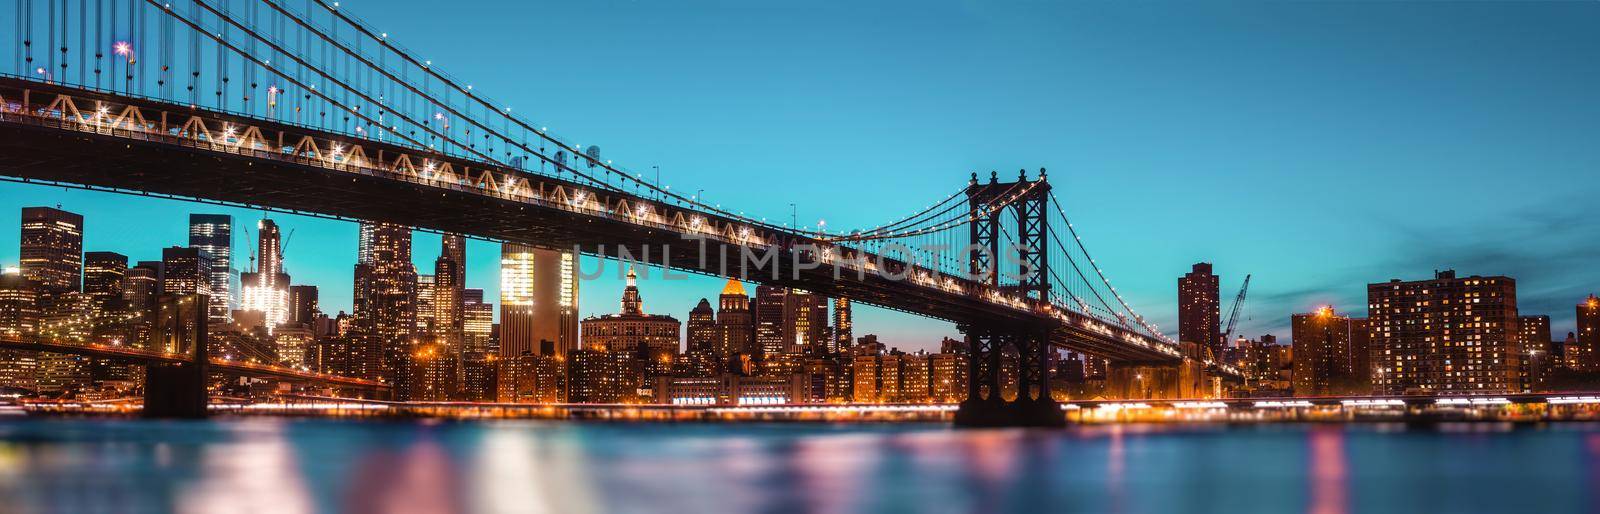 Manhattan Bridge At Night by palinchak